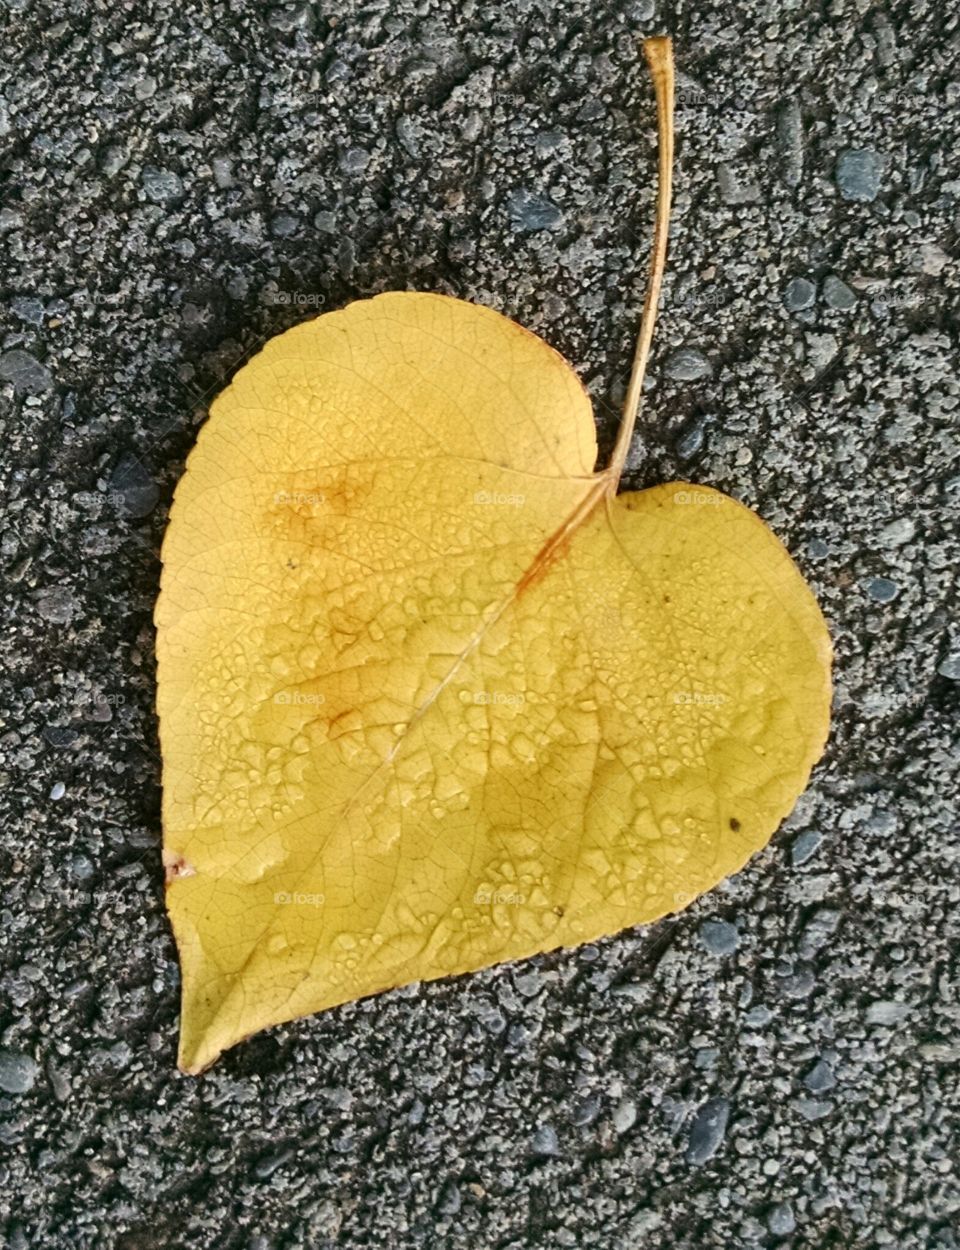 God's Love is everywhere! Leaf it here!